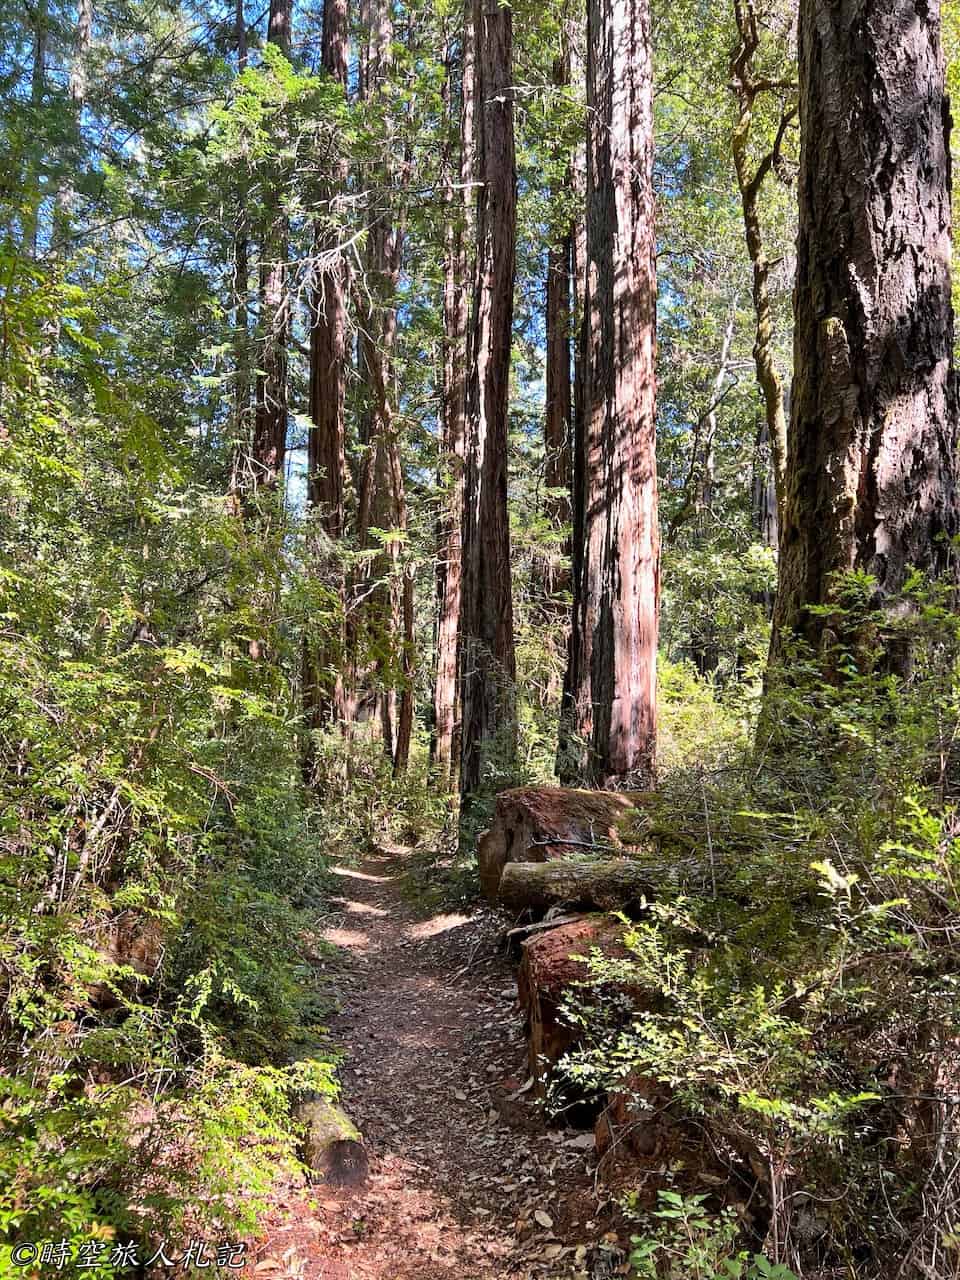 Portola redwood state park 27